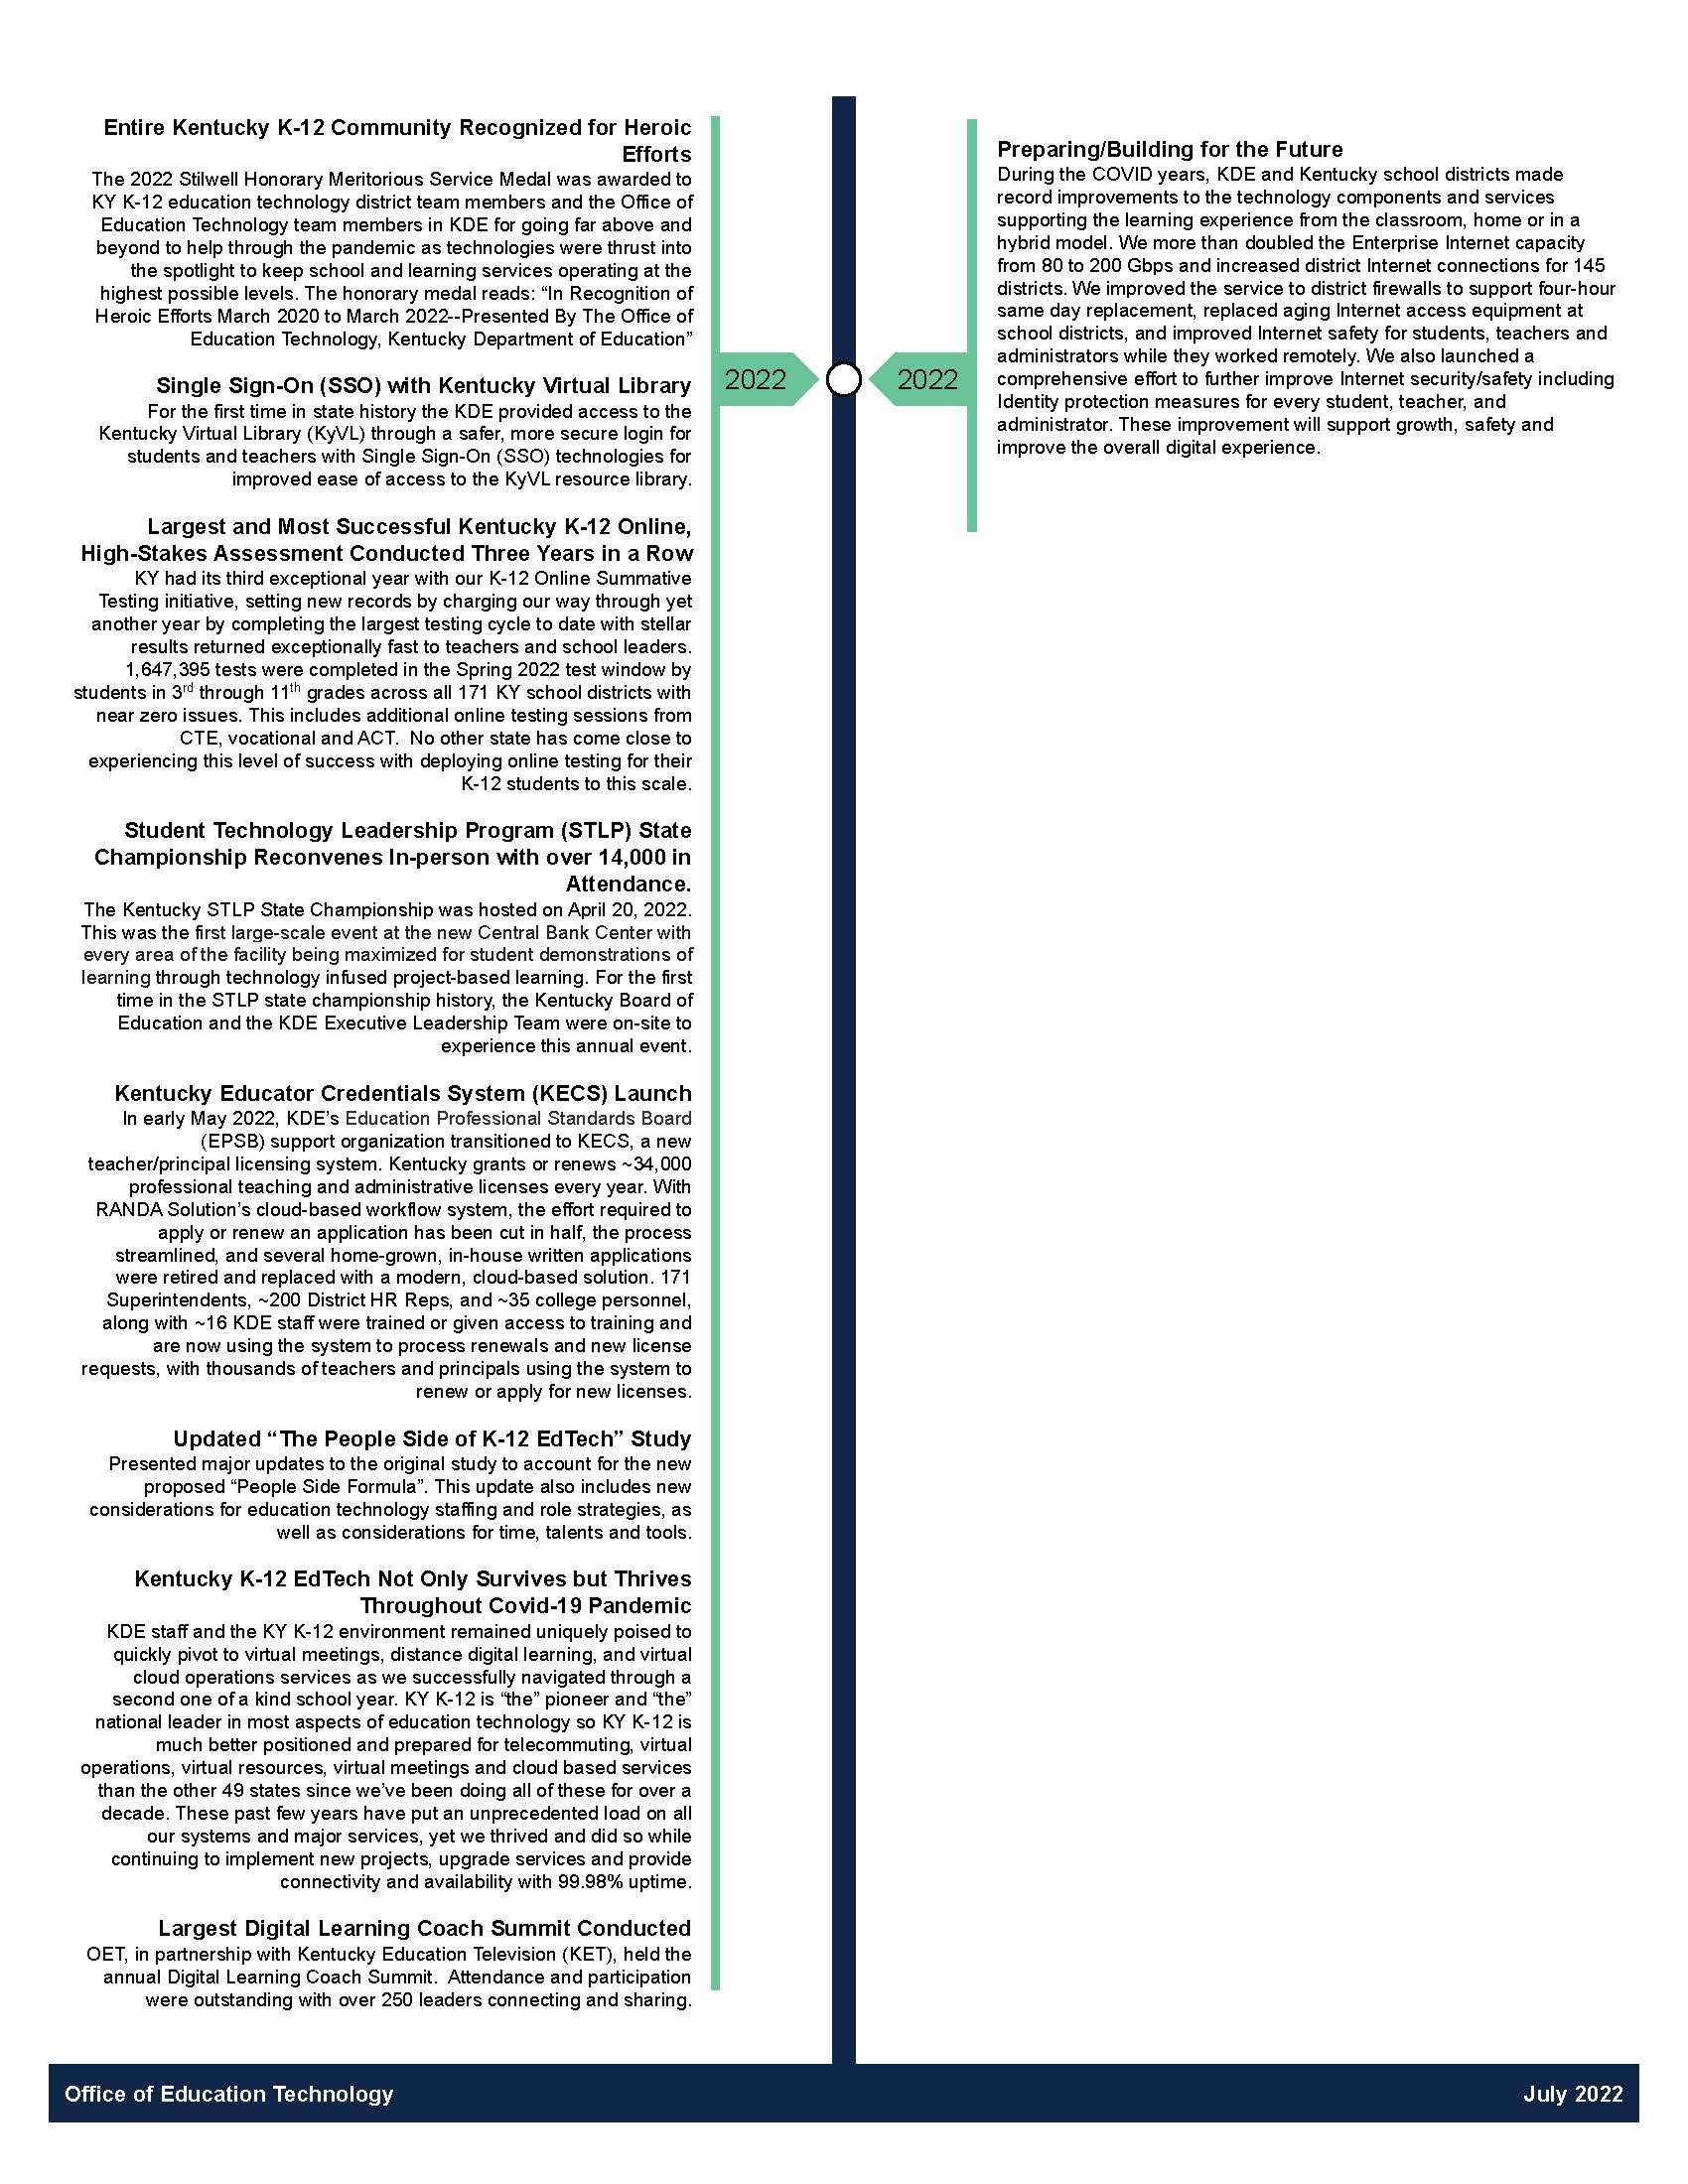 KETS Timeline_2022 (1)_Page_6.jpg